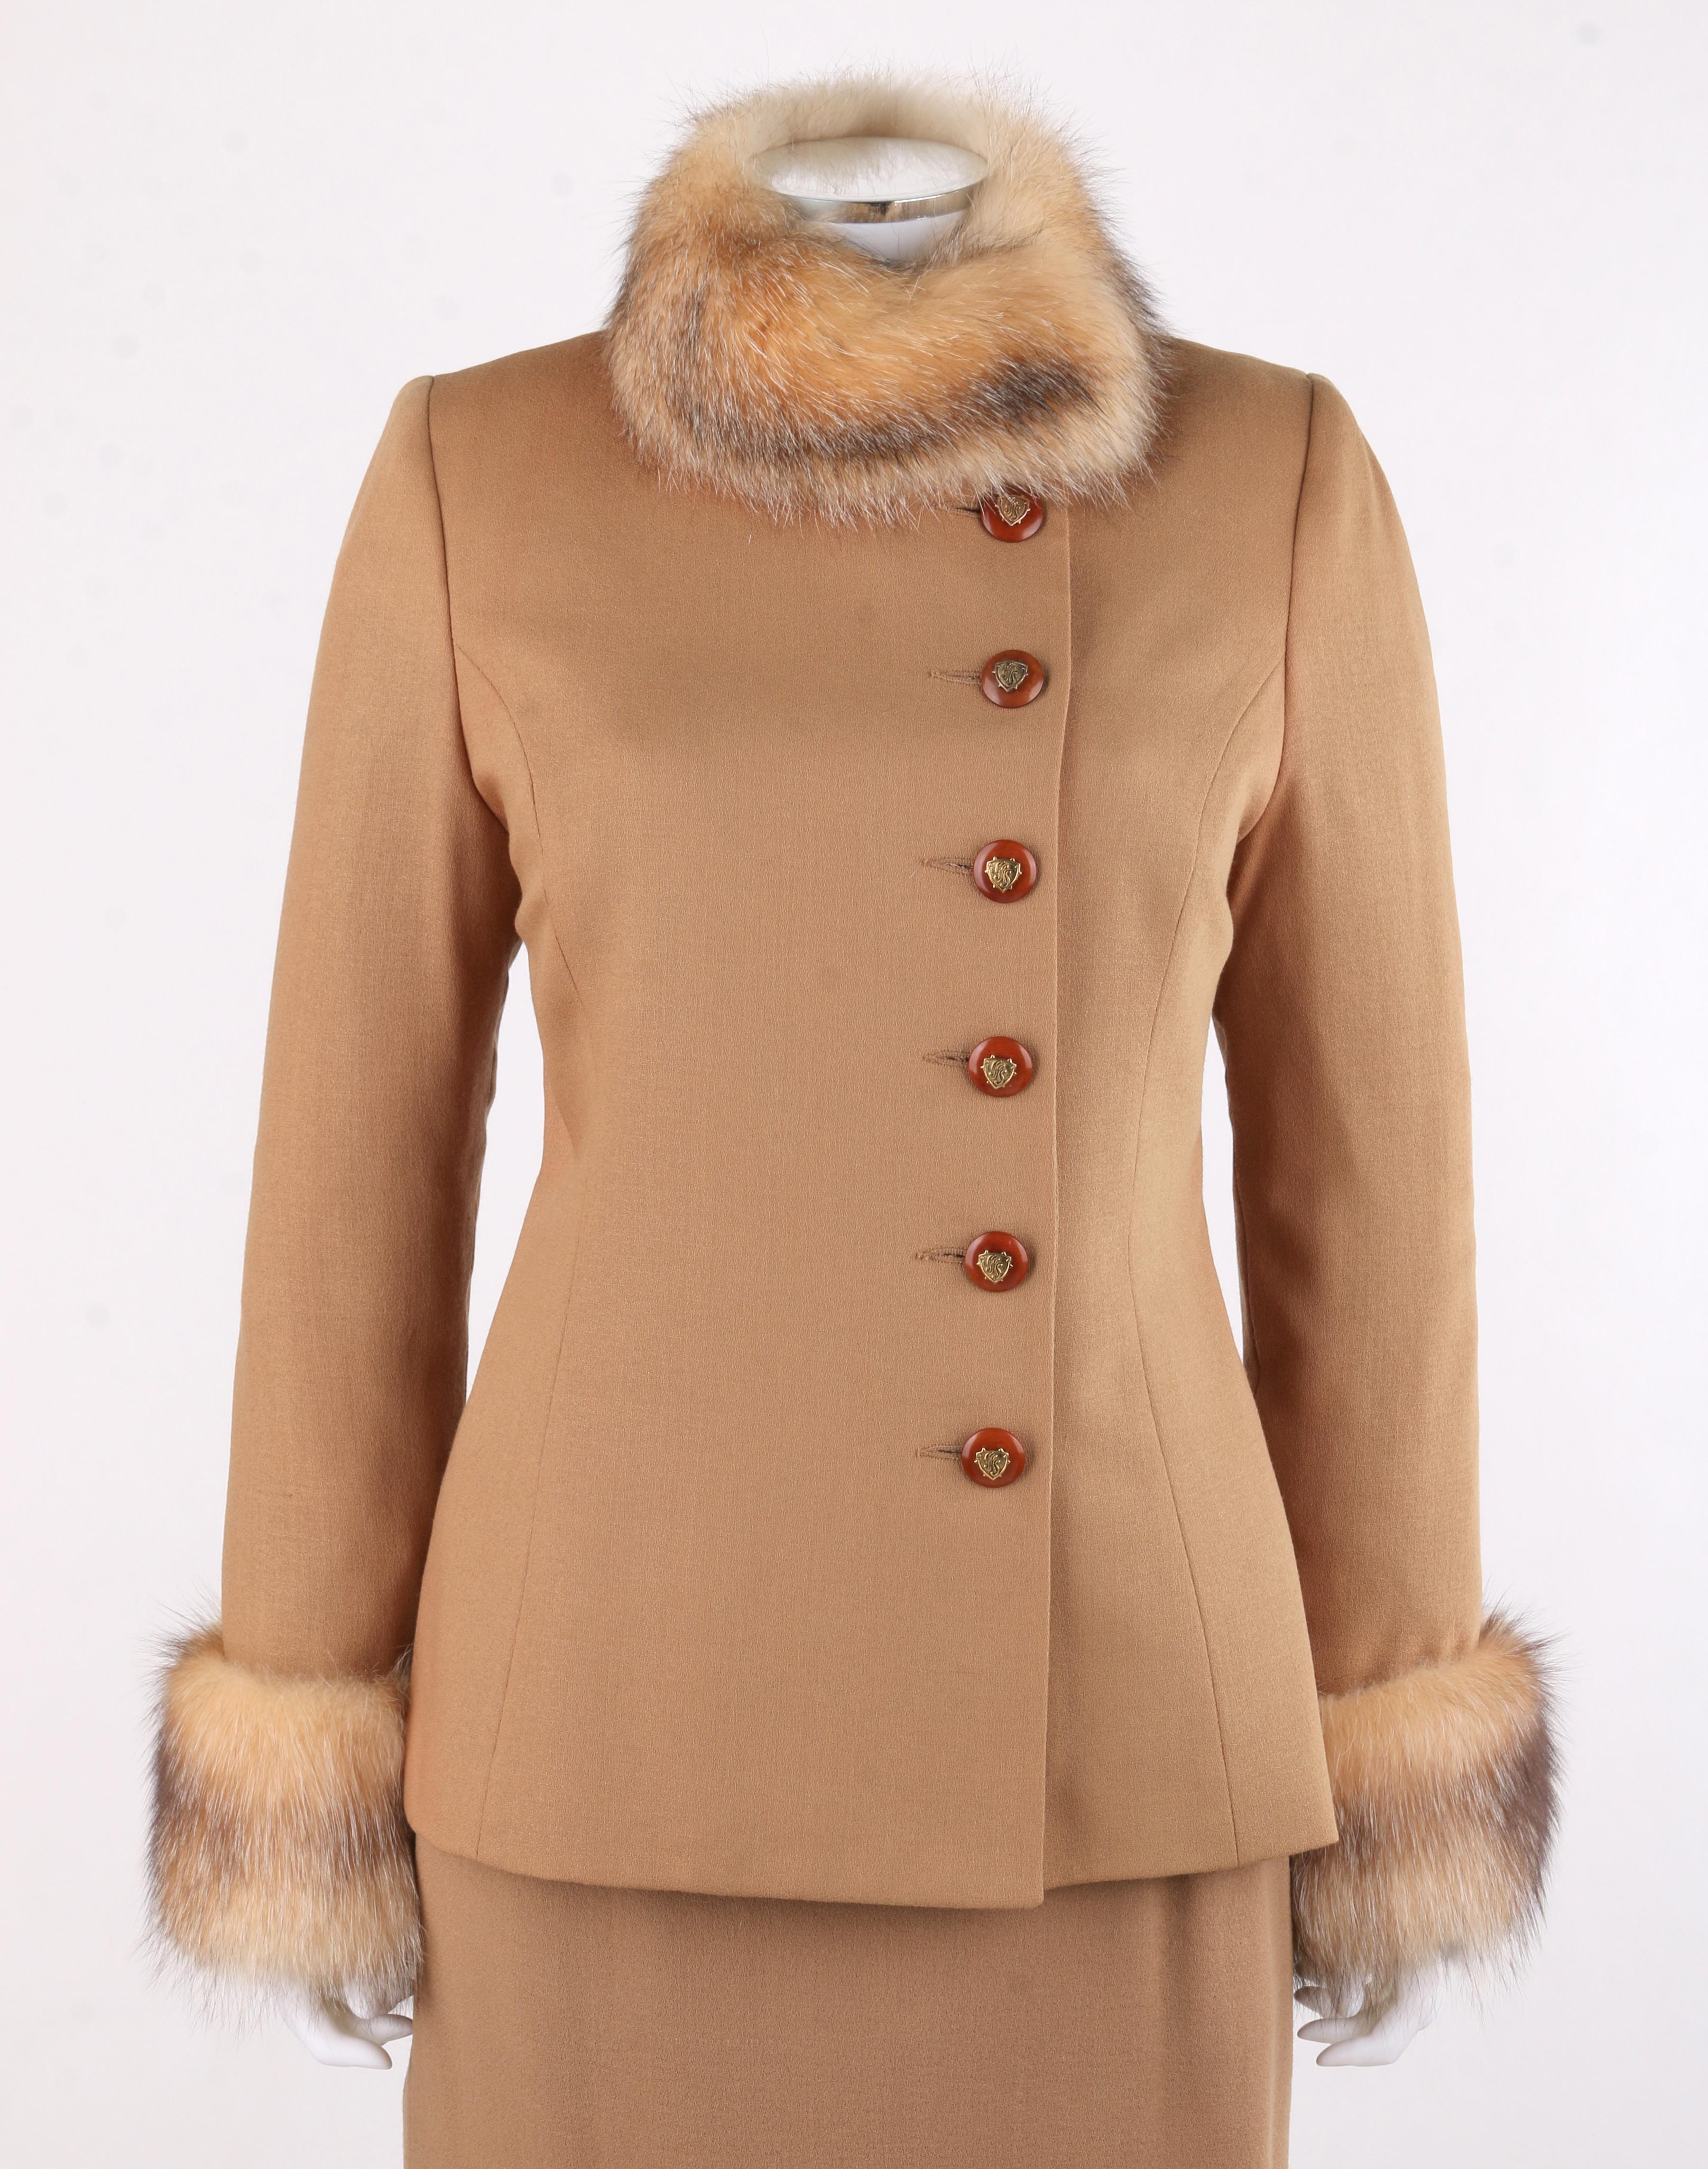 LILLIE RUBIN c.1980’s 2 Pc. Peruvian Camel Red Fox Fur Wool Blazer Jacket Skirt Set 
 
Circa: 1980’s  
Label(s): Lillie Rubin / Made in USA / 6 
Designer: Lillie Rubin
Style: Blazer Jacket / S
Color(s): Brown (reddish hue)
Lined: Yes
Marked Fabric